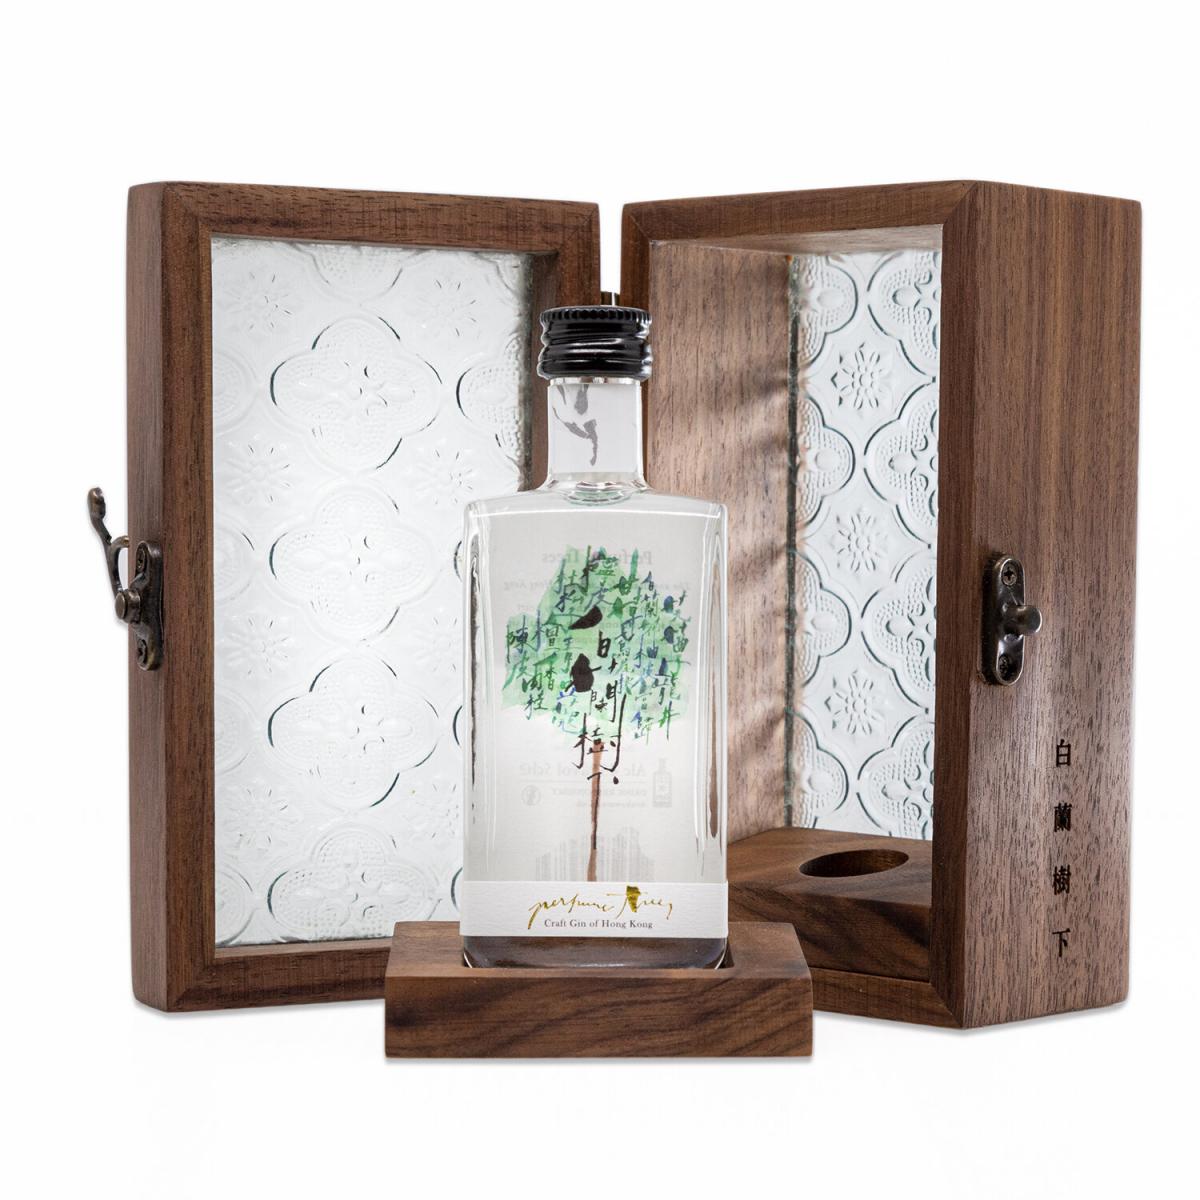 Tankyu Perfume Trees Gin Premium Miniature Box Set 白蘭樹下迷你珍藏木盒套裝